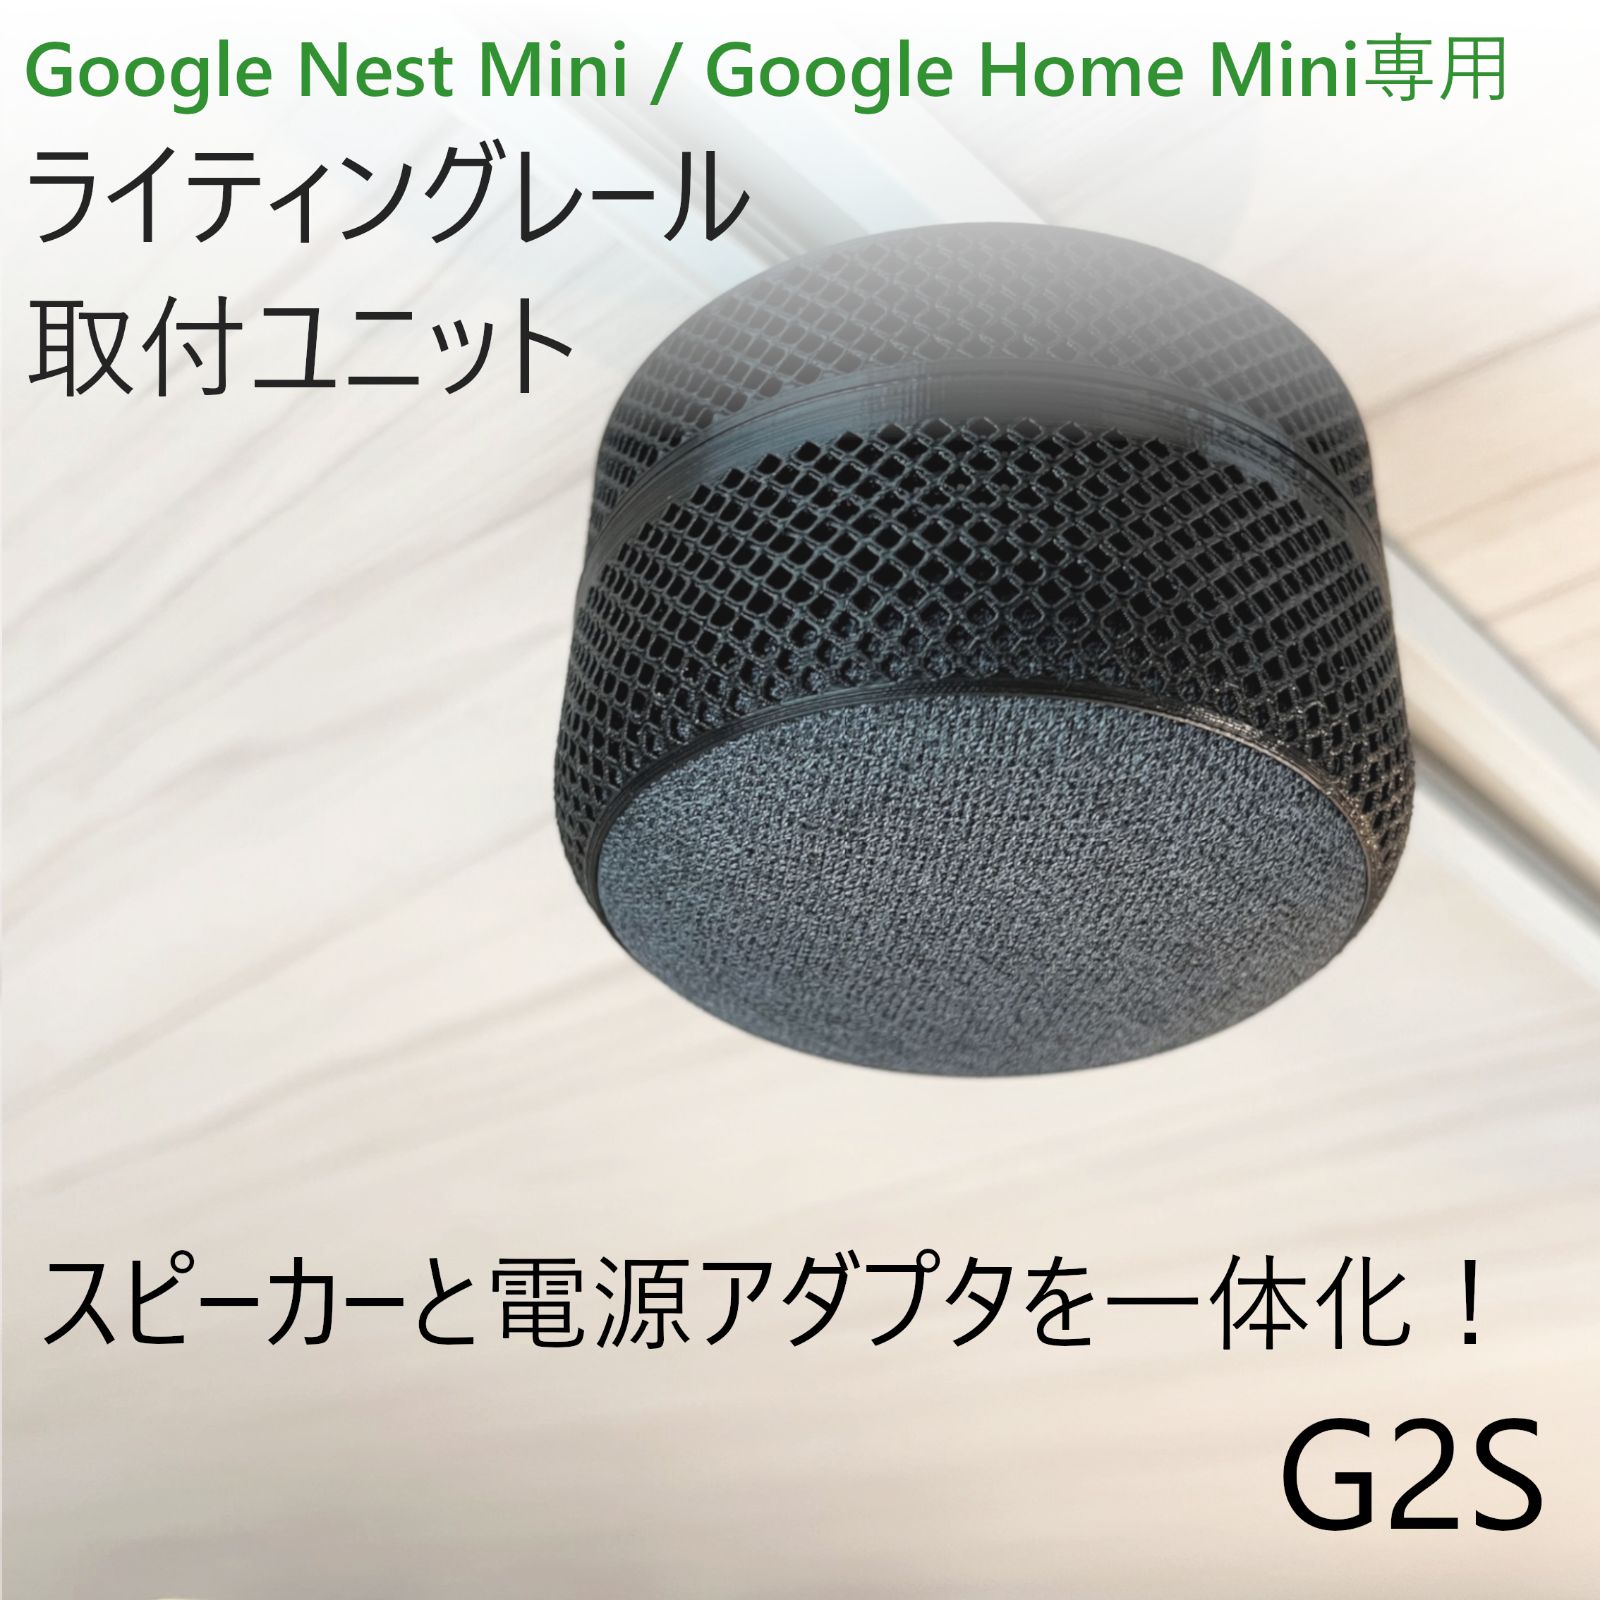 Google Nest Mini第2世代2台セット - アンプ